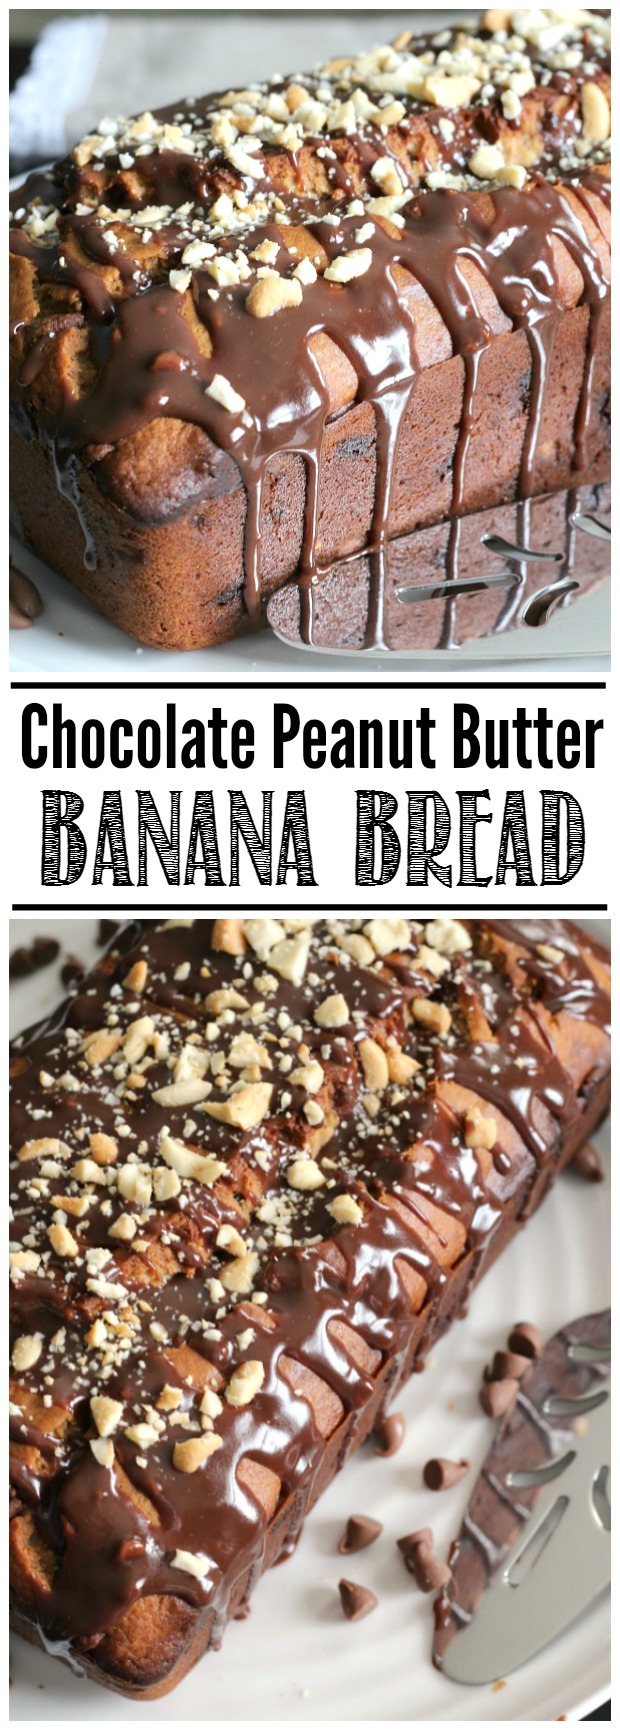 Easy chocolate peanut butter banana b0read with a chocolate glaze. My favorite banana bread recipe!